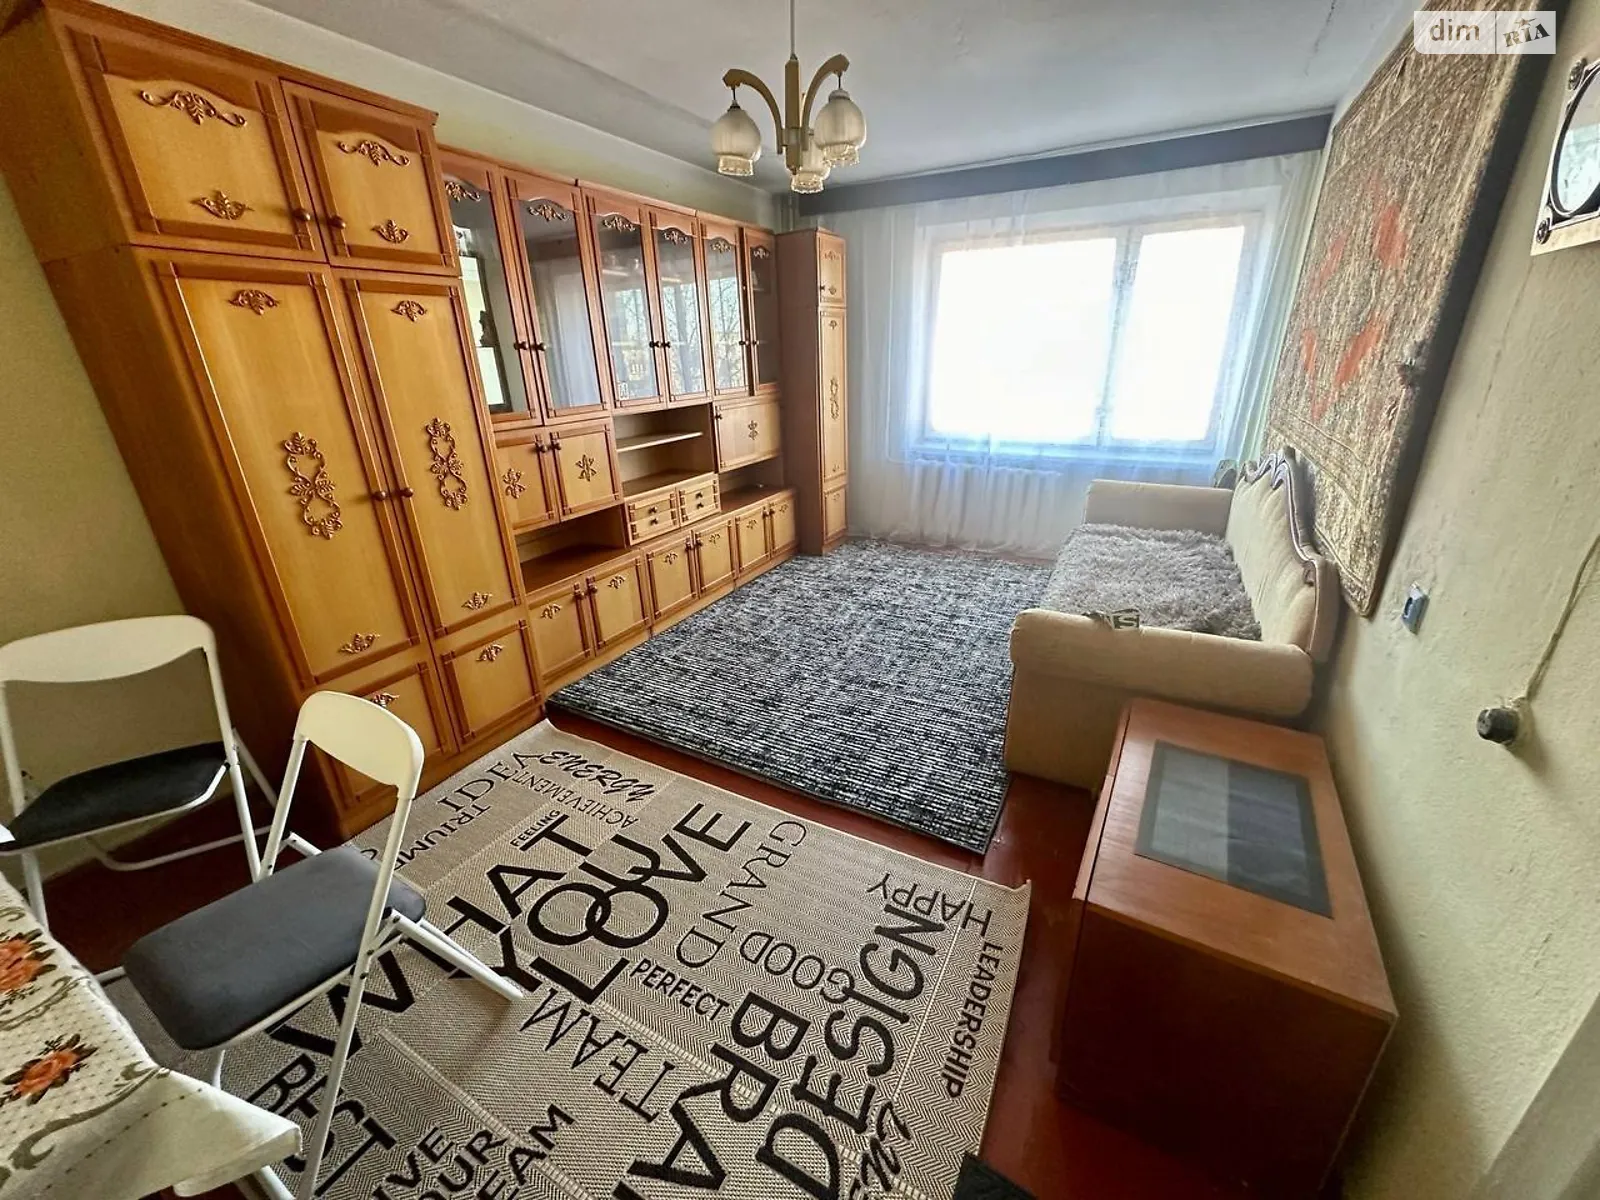 Продается комната 25 кв. м в Ровно - фото 2